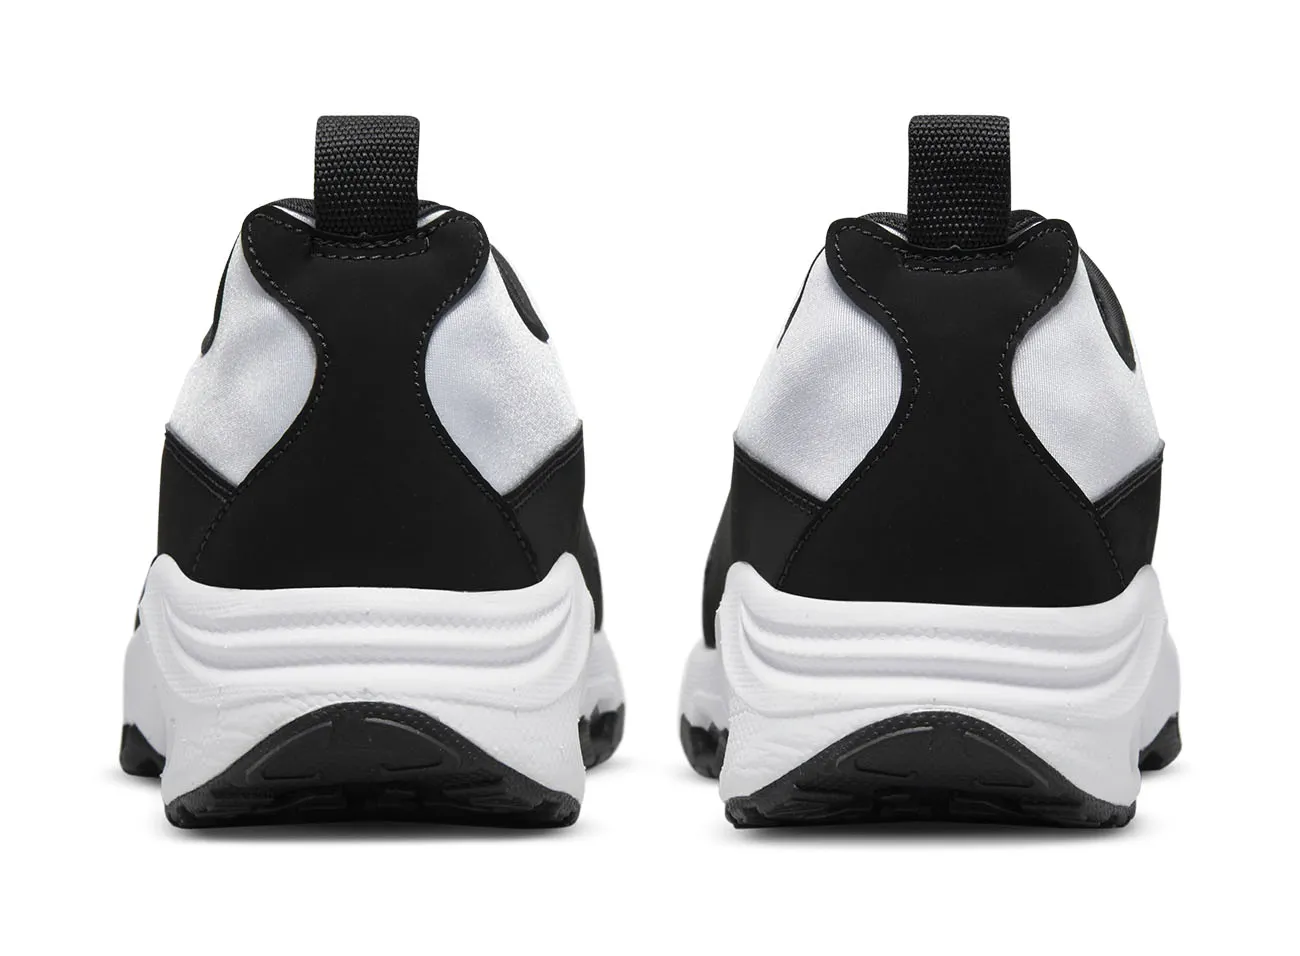 Comme des Garçons x Nike Air Max Sunder "White/Black"